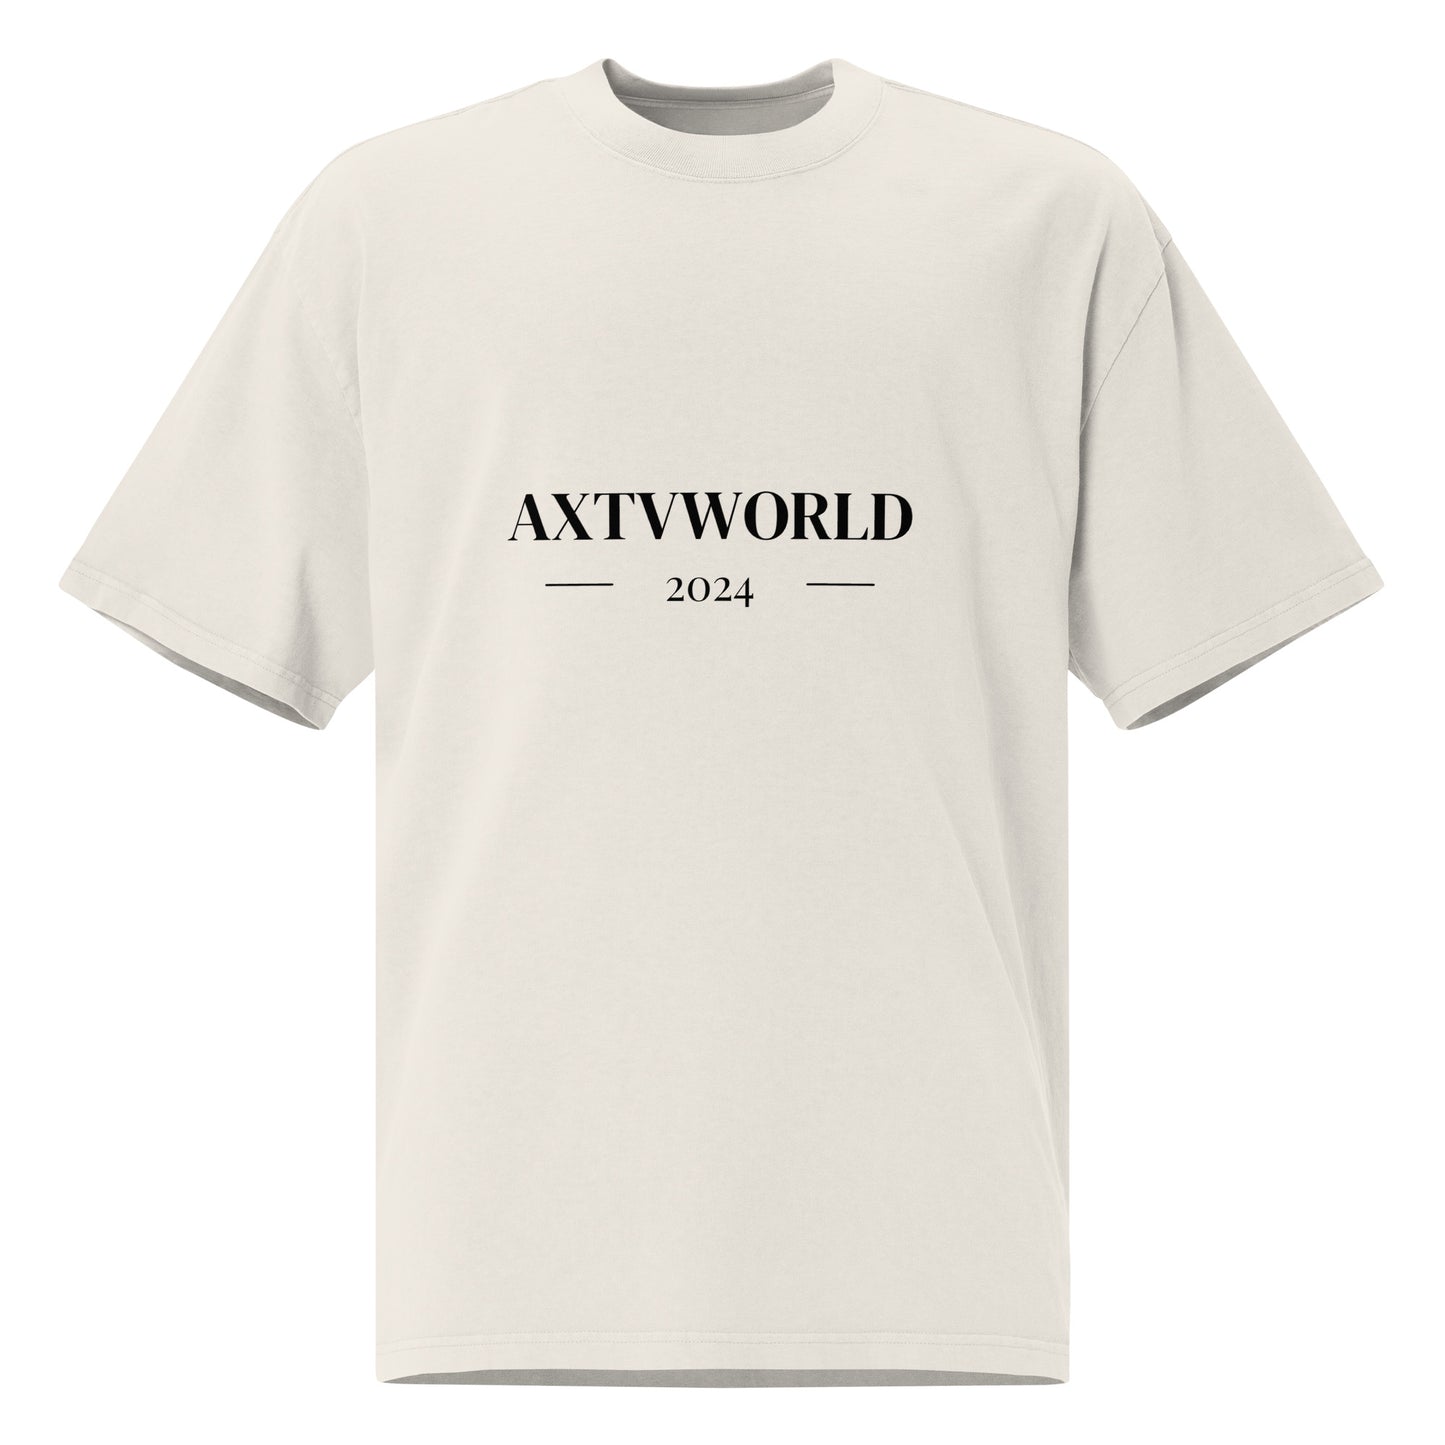 axtvworld over-sized T-shirt